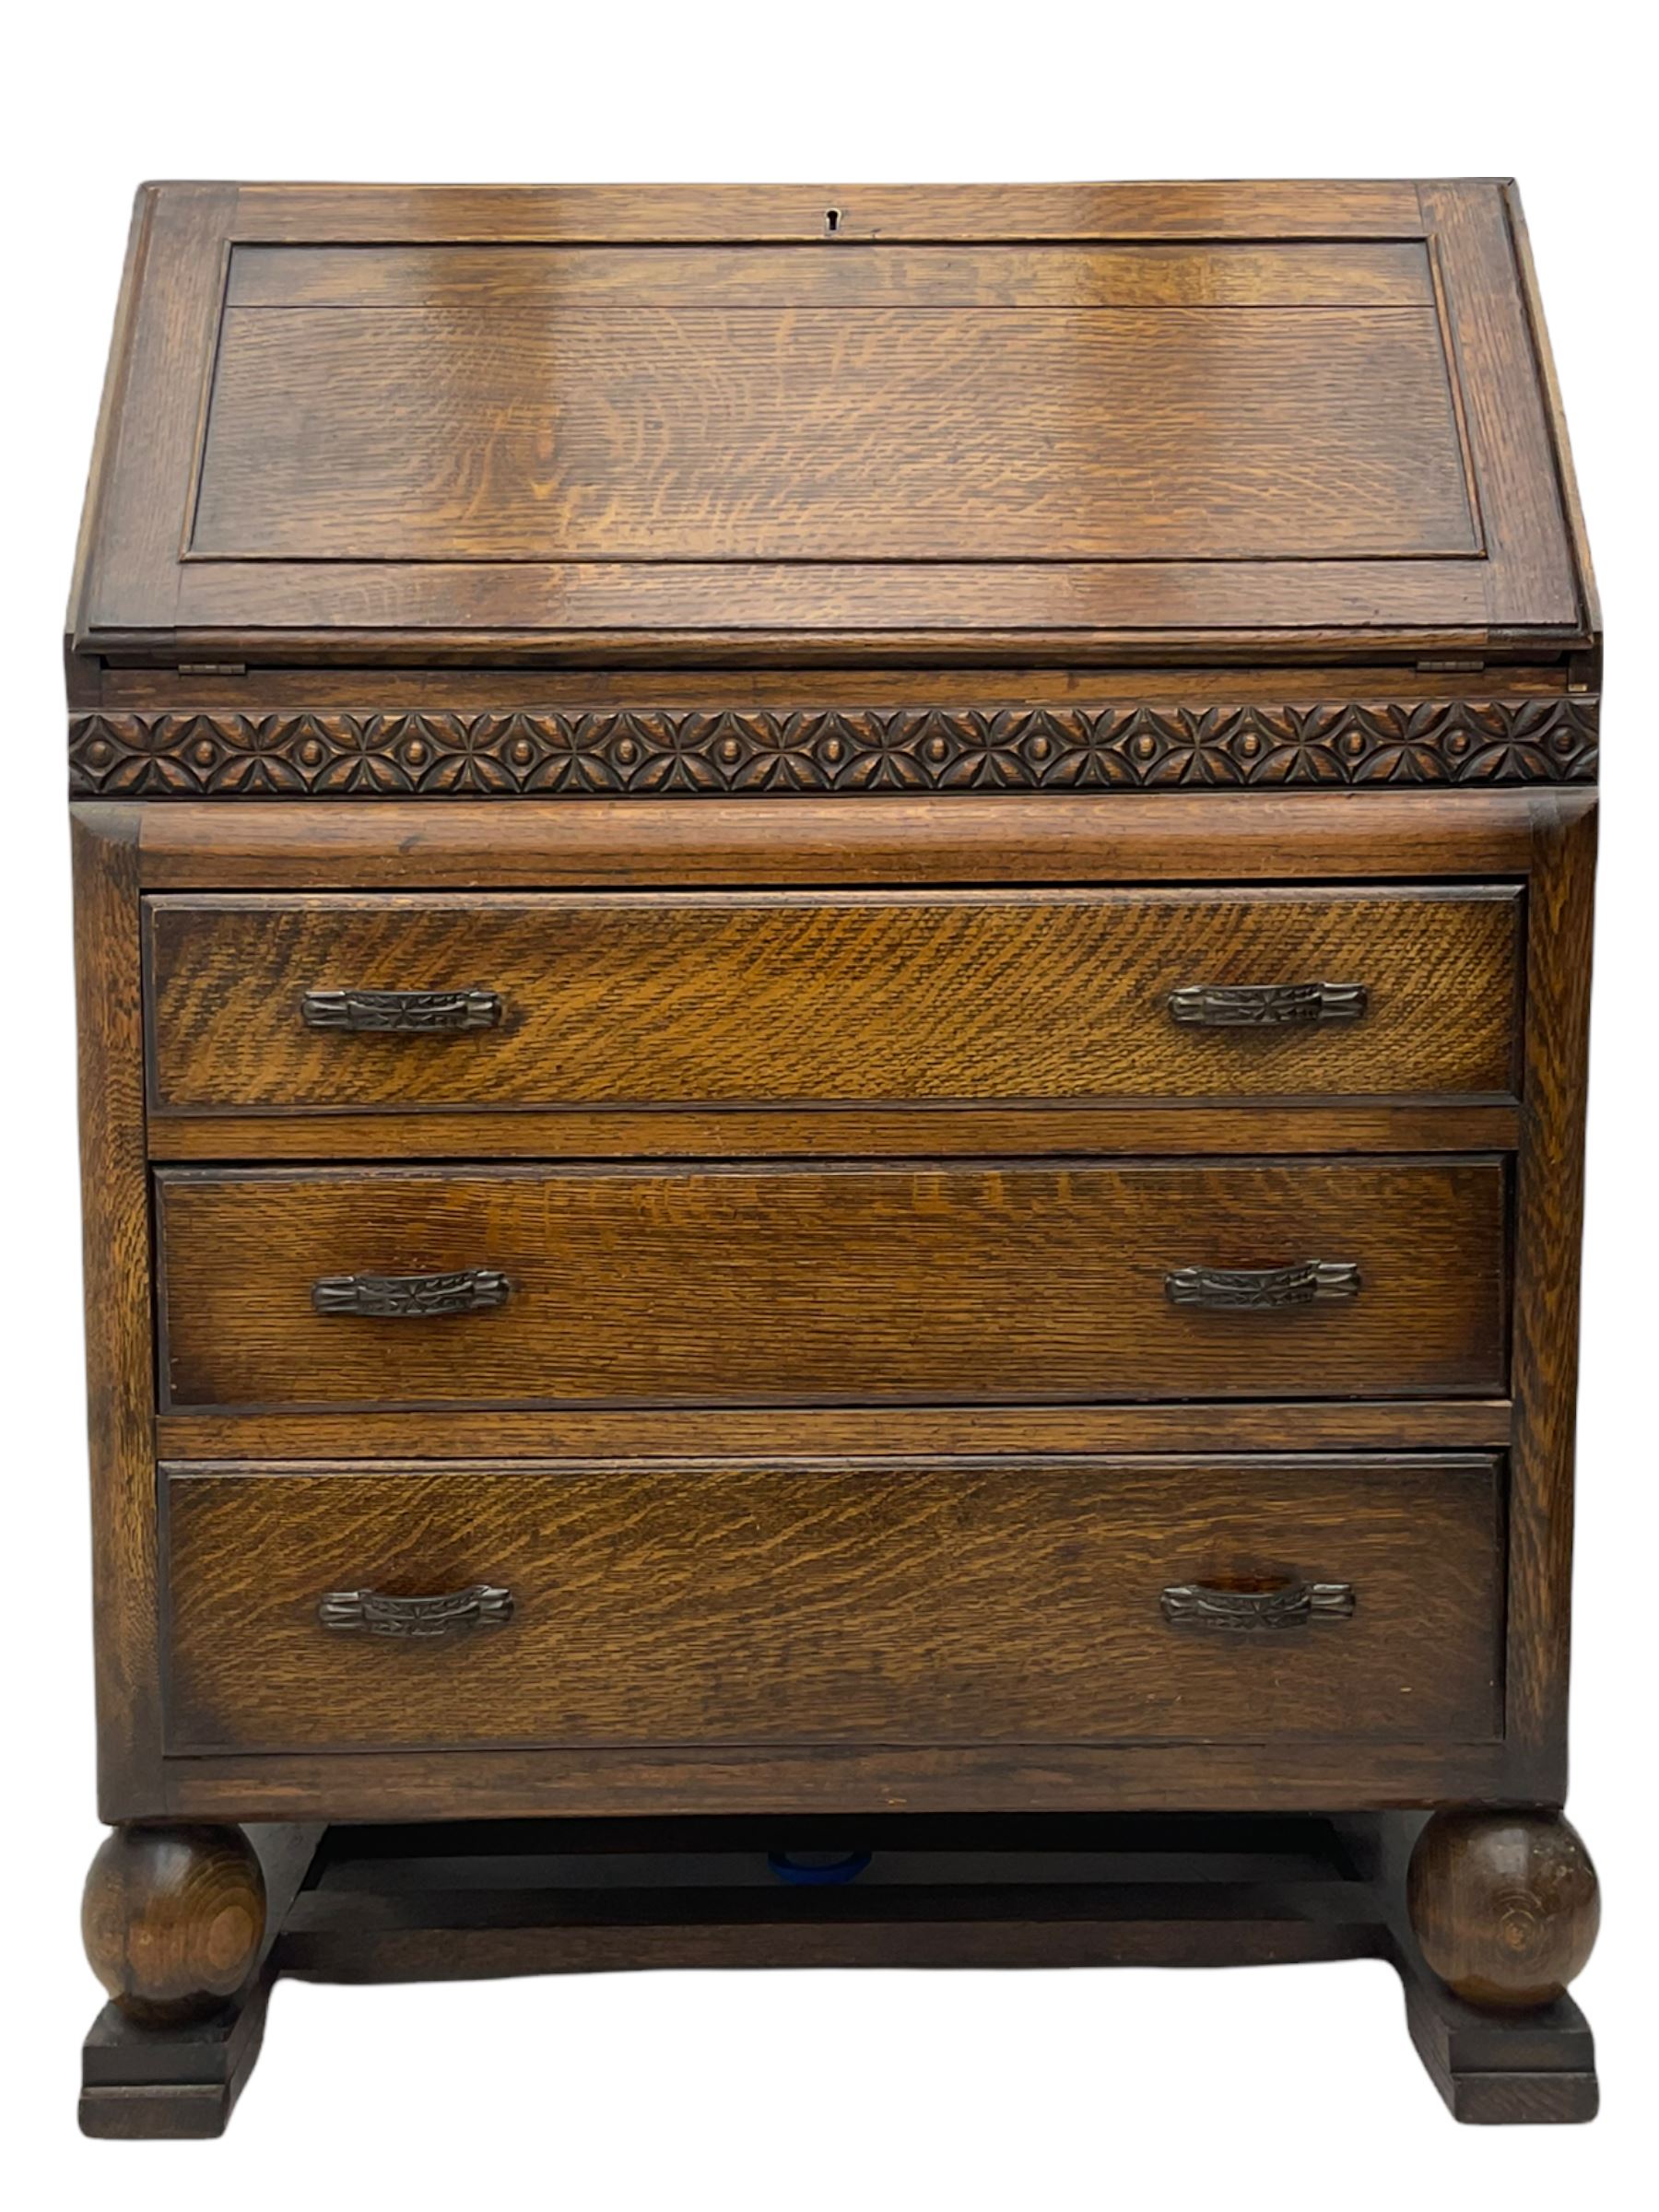 Early 20th century oak three drawer oak bureau